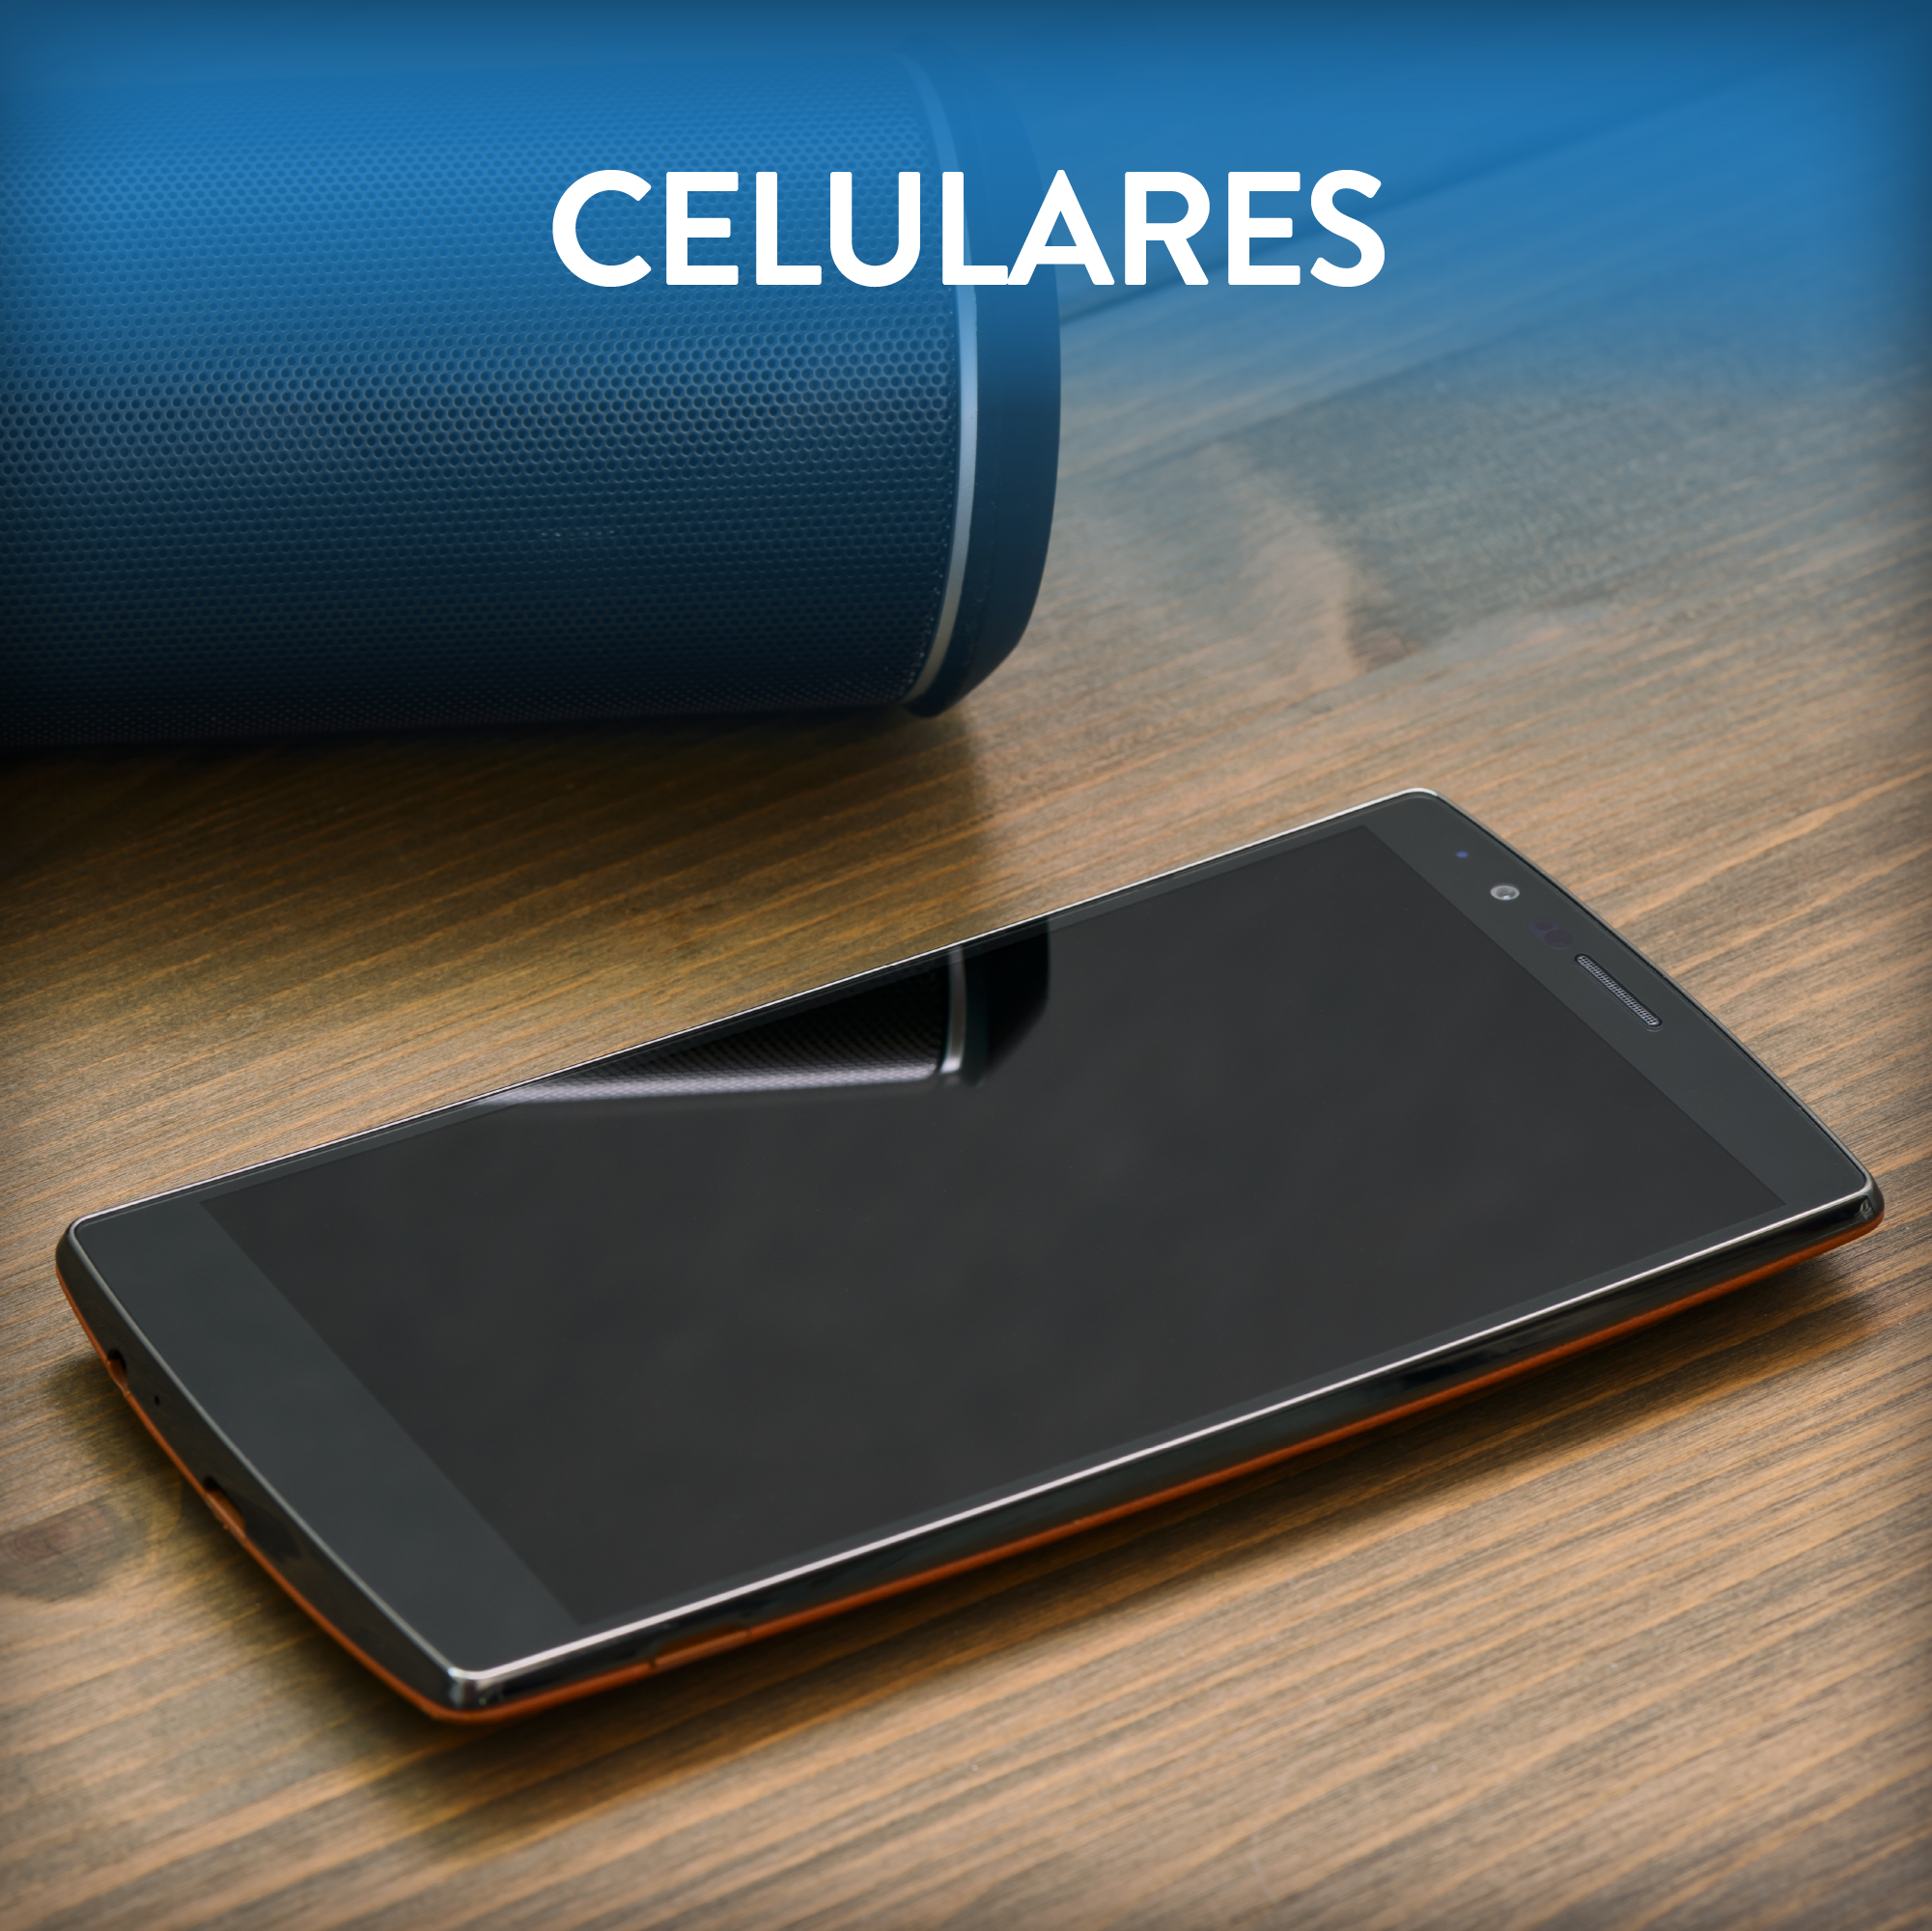 Celulares, smartphones